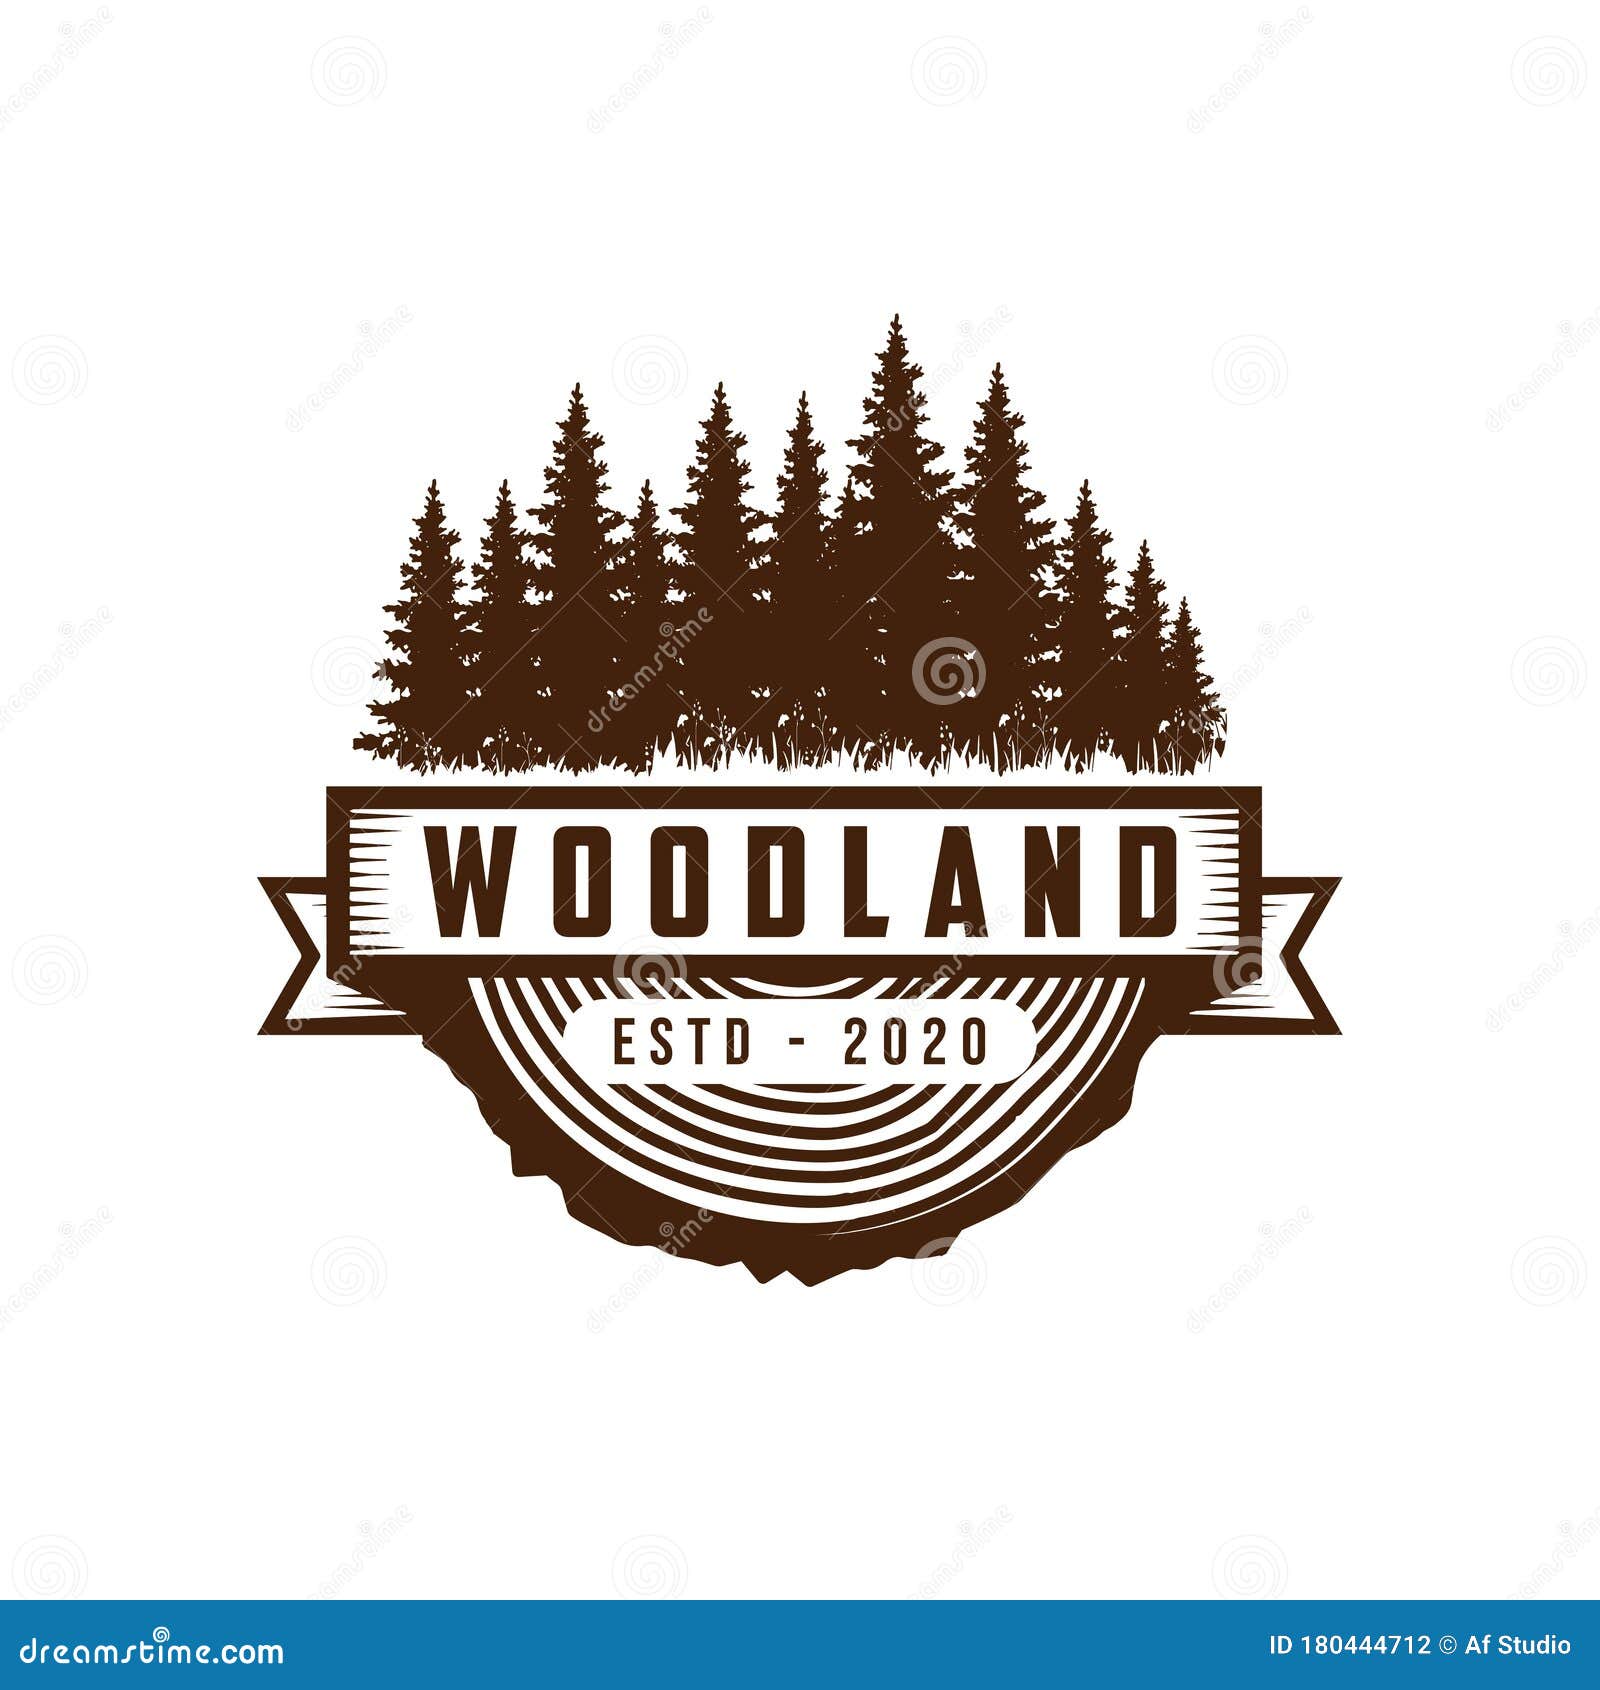 rustic vintage evergreen, pines, spruce, cedar trees logo  